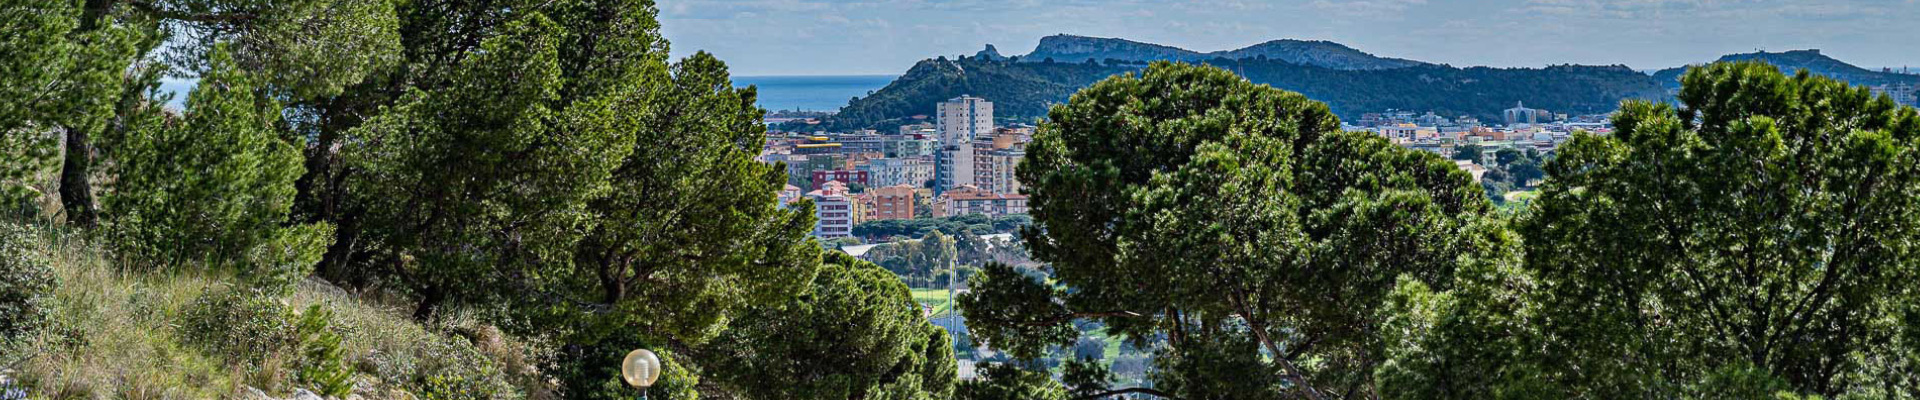 Cagliari Verde